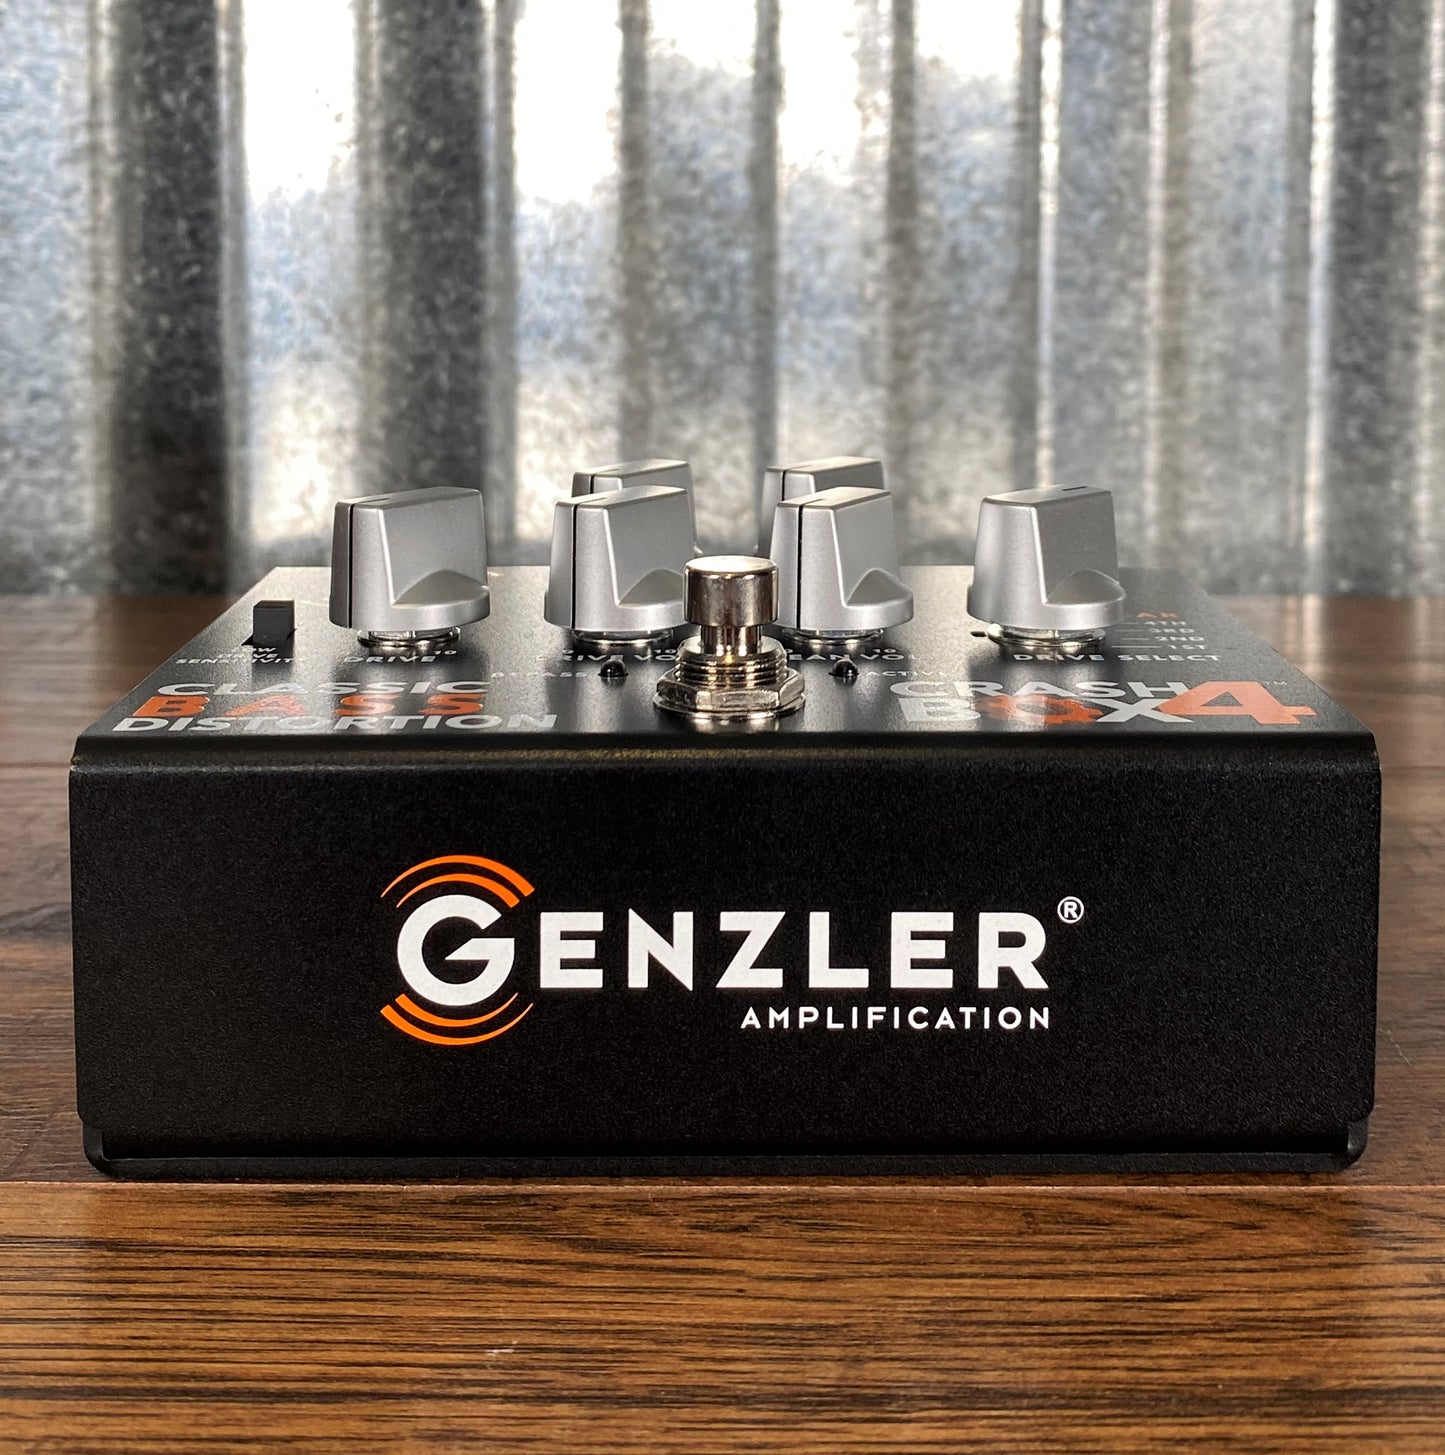 Genzler Amplification CB-4 Crash Box 4 Mode Classic Bass Distortion Effect Pedal